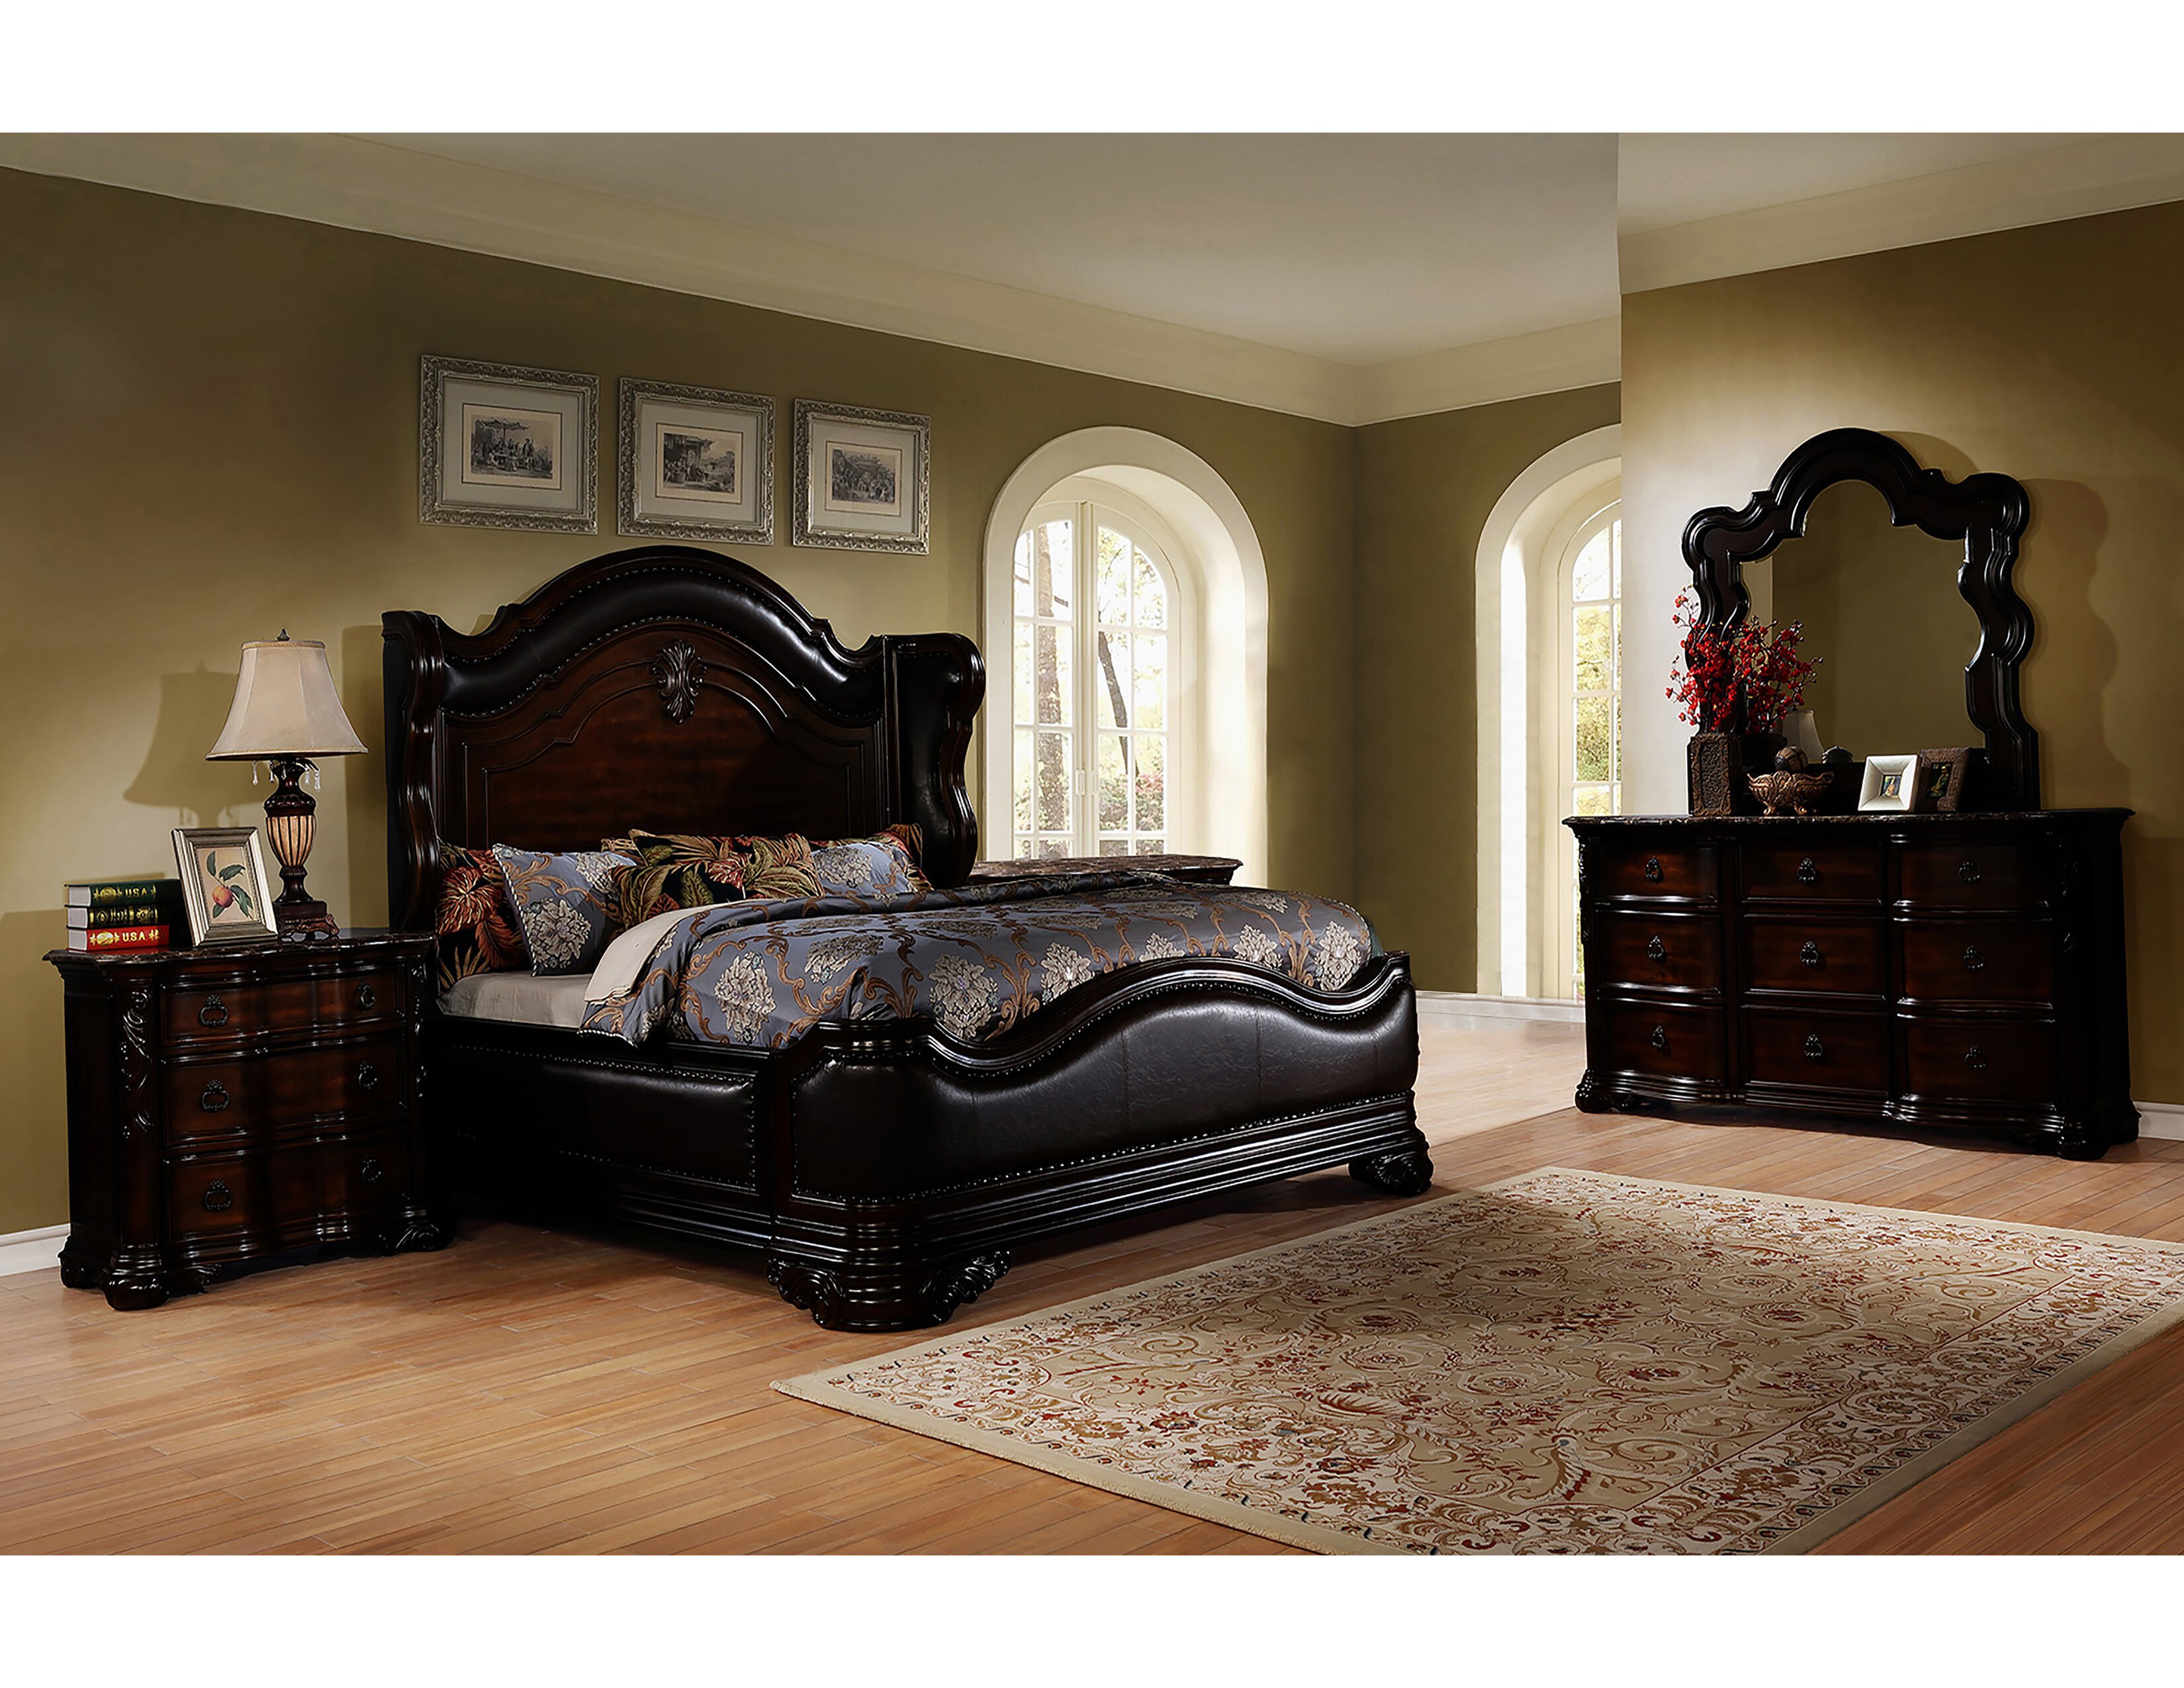 elegant solid wood bedroom furniture